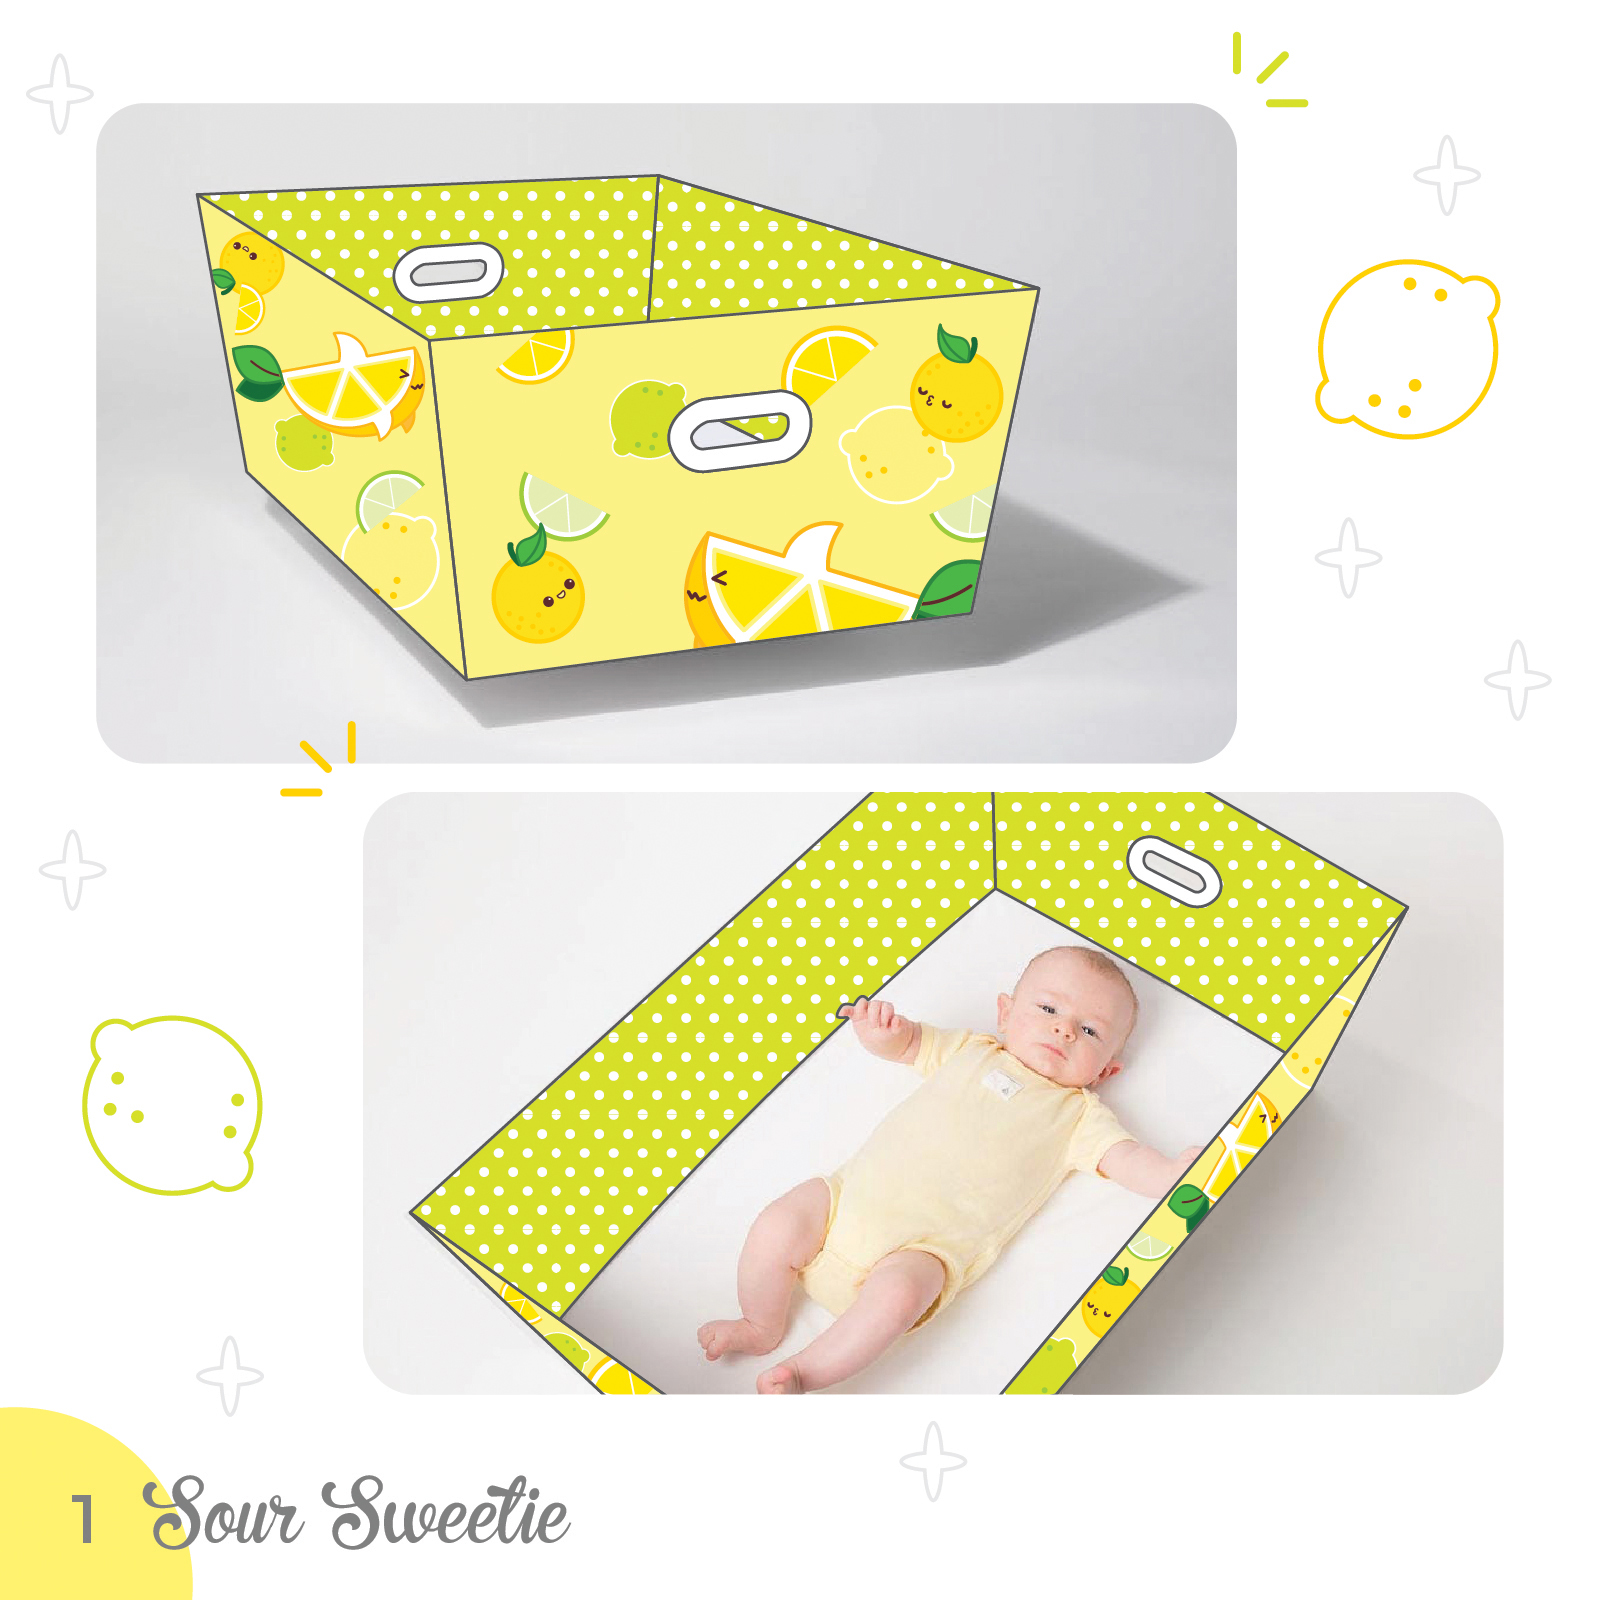 Custom pattern art for a baby box by Sophia Adalaine